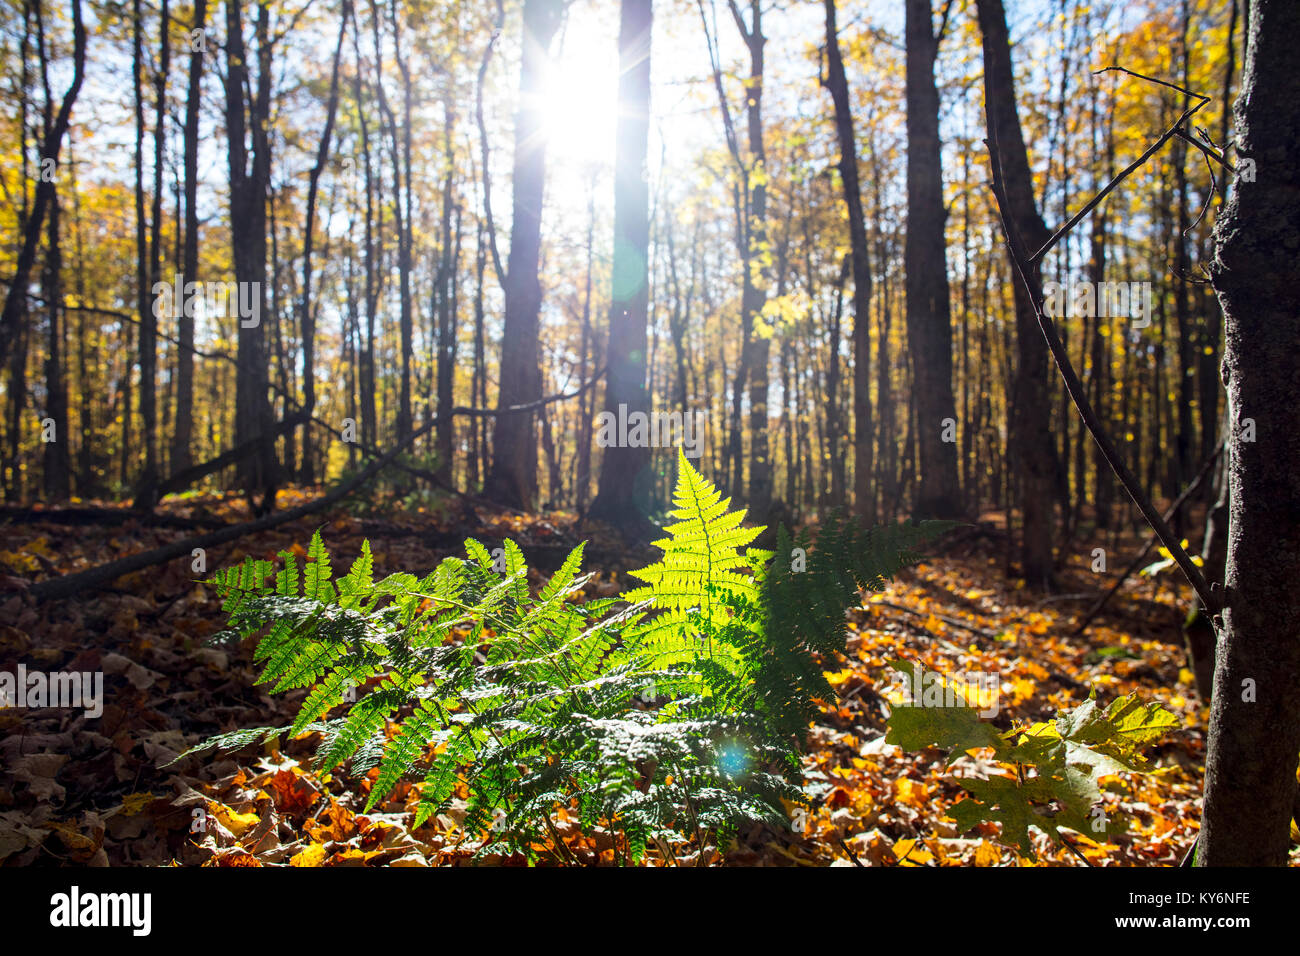 MAYNOOTH, Ontario, Canada - 20 Ottobre 2017: il sole illumina una felce su una caduta forest floor. Foto Stock